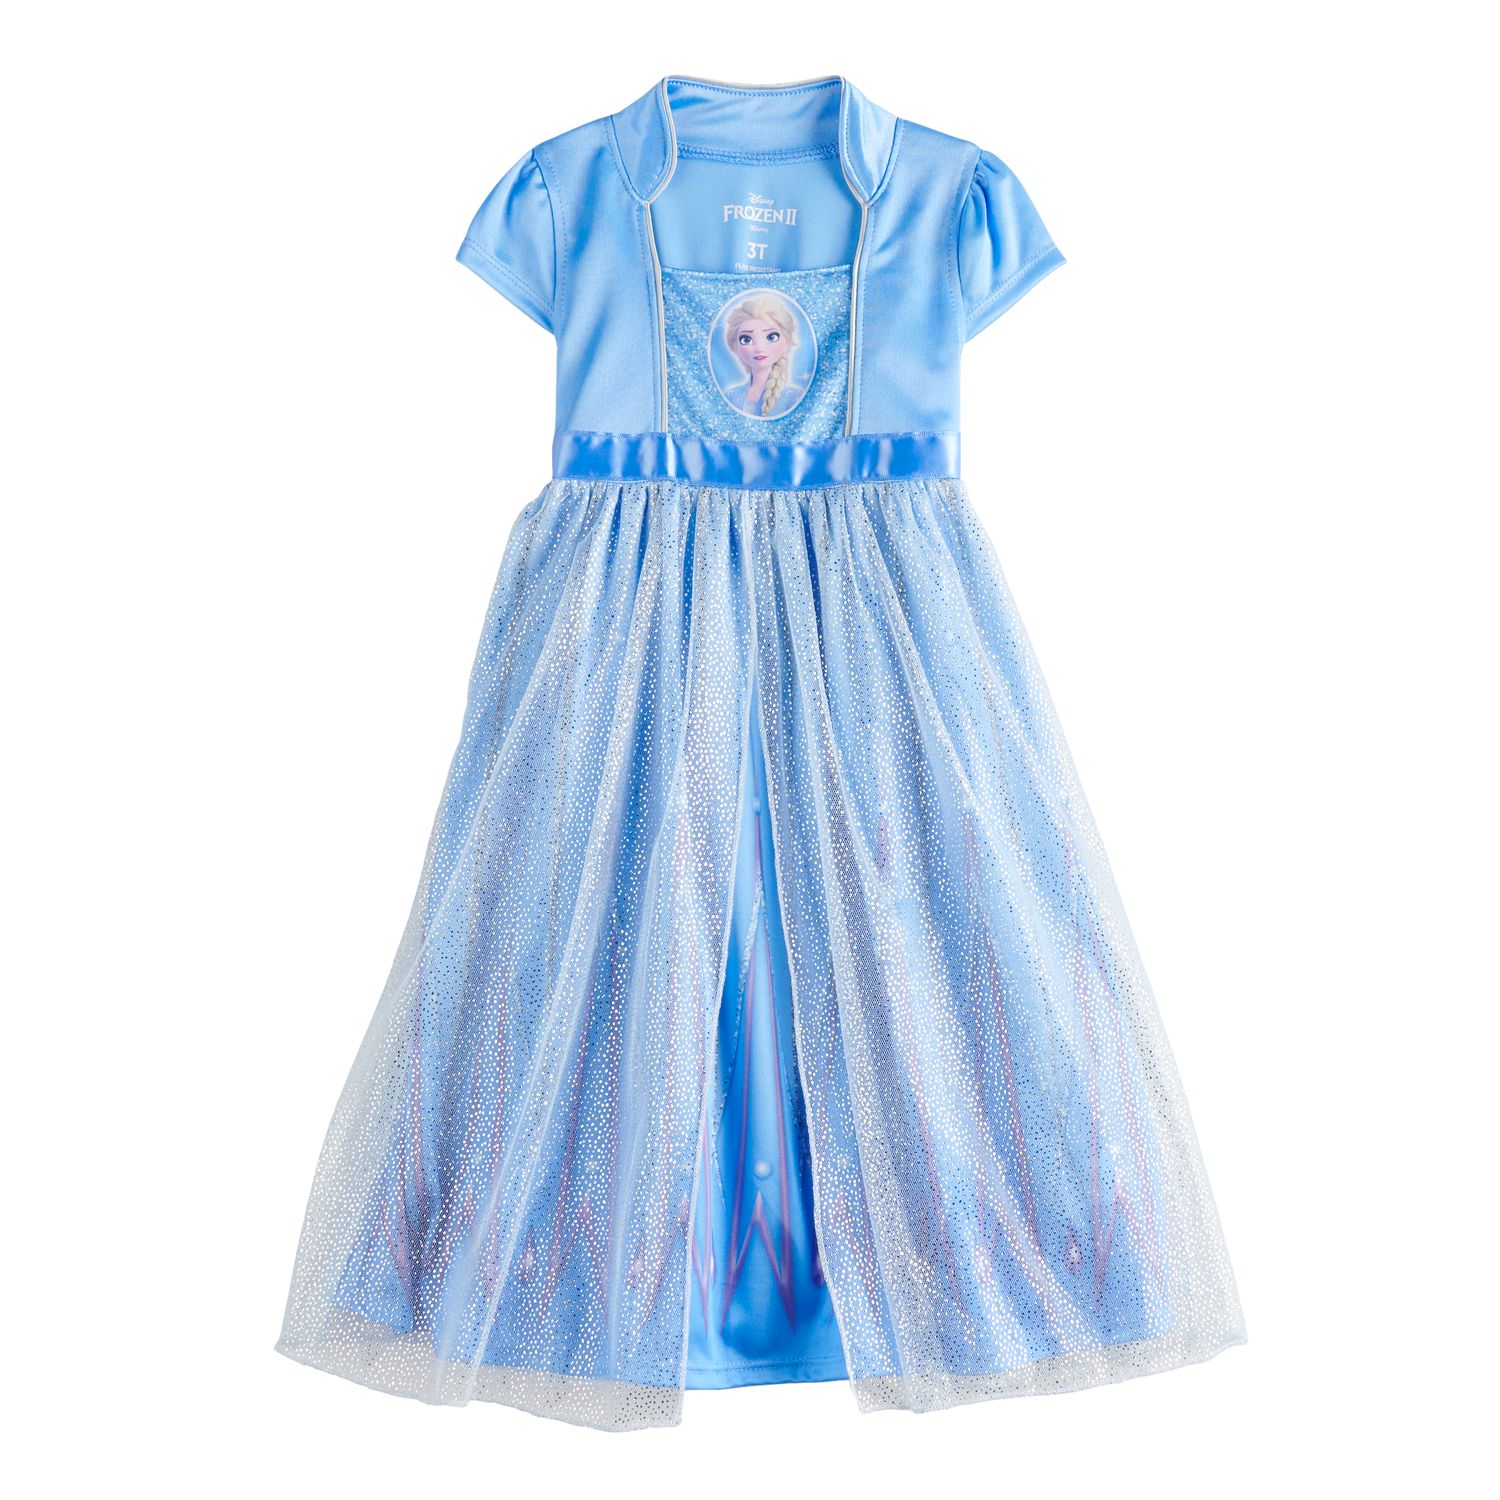 Image for Disney 's Frozen 2 Elsa Toddler Girl Fantasy Nightgown at Kohl's.